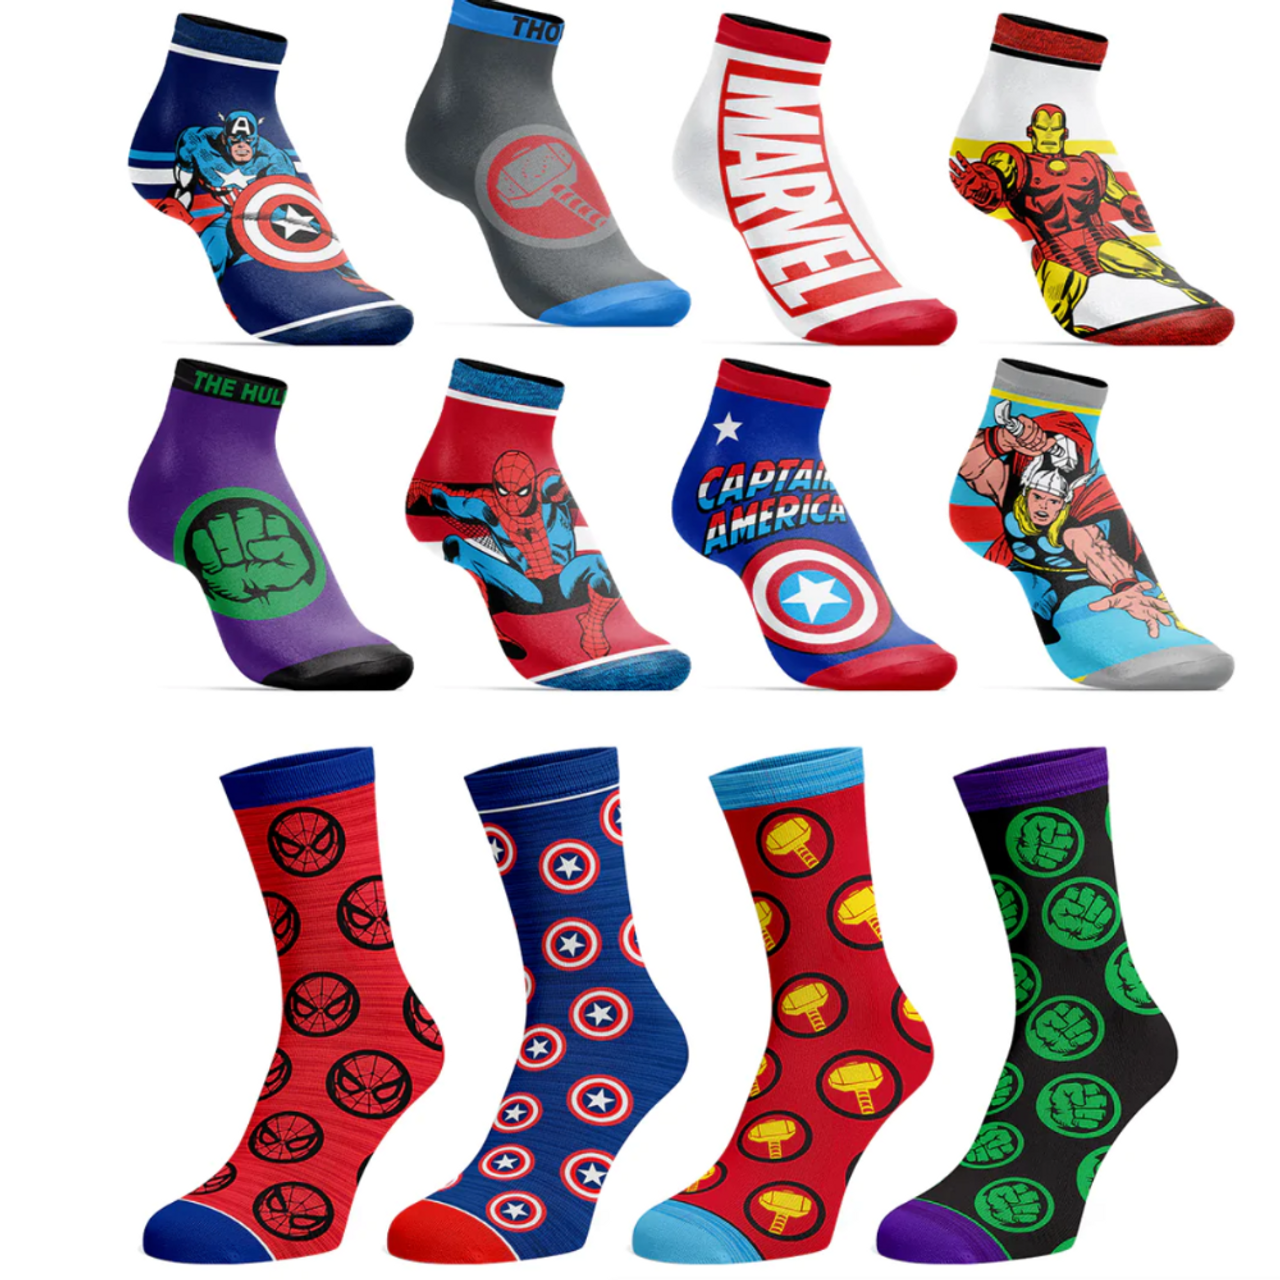 Marvel 15 Days of Socks (7 Crew and 8 Low Cut Socks)